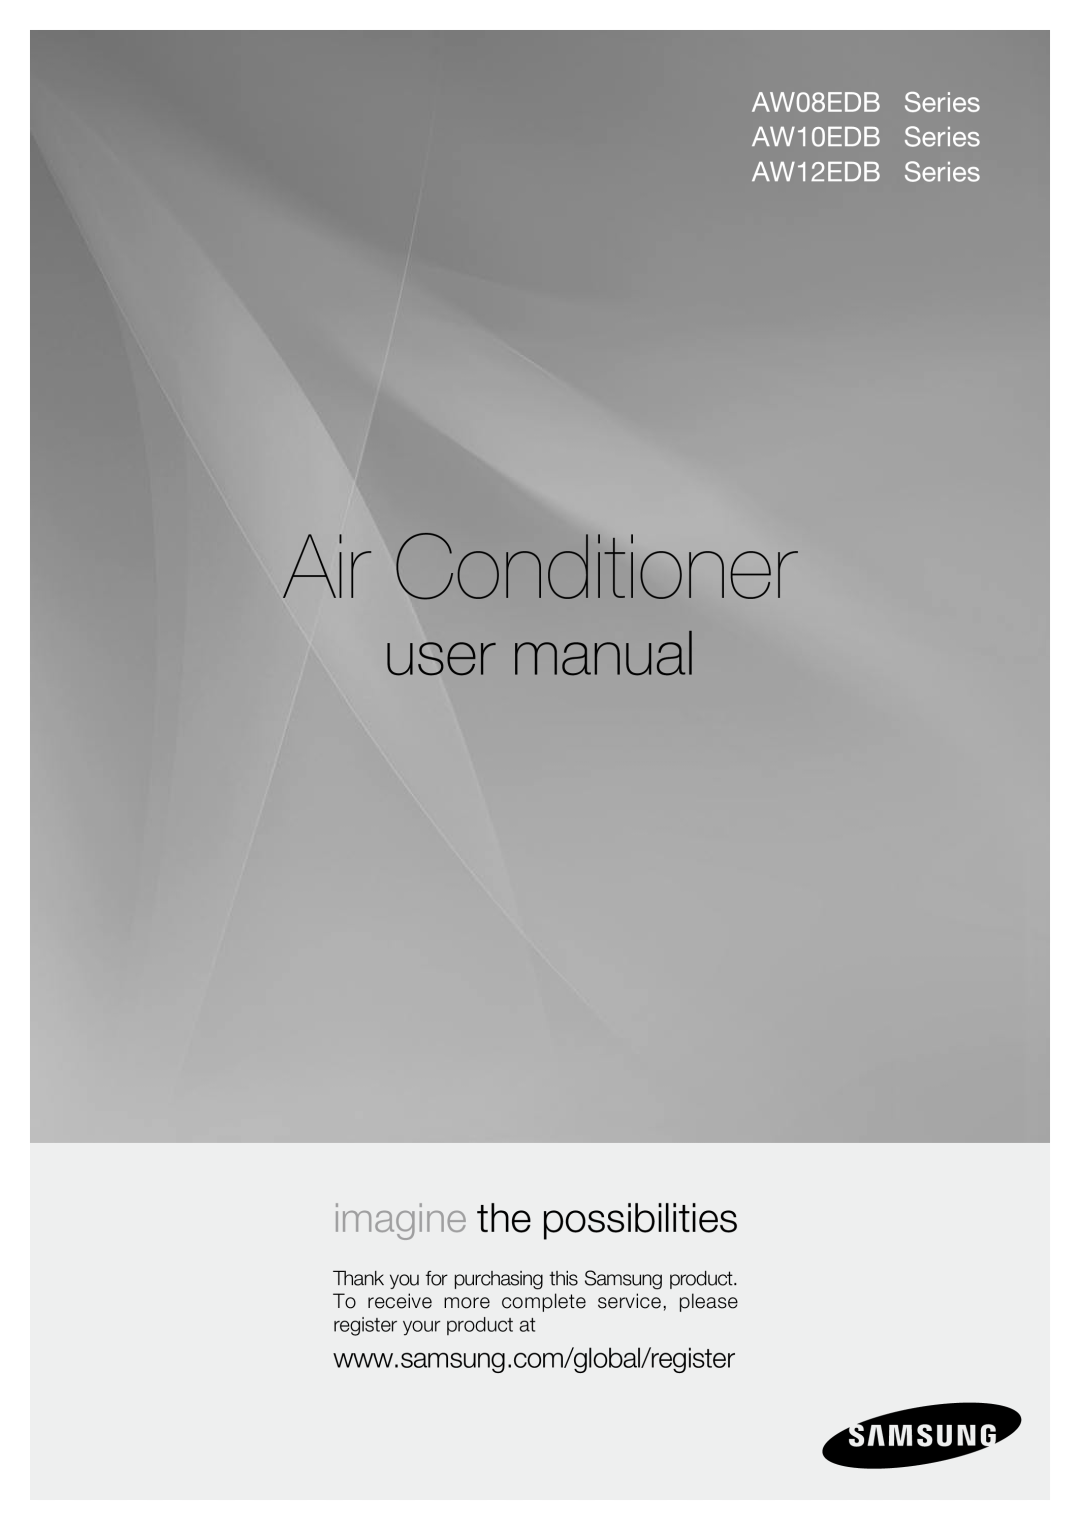 Samsung AW12EDB Series, AW10EDB Series, AW08EDB Series user manual Air Conditioner, imagine the possibilities 